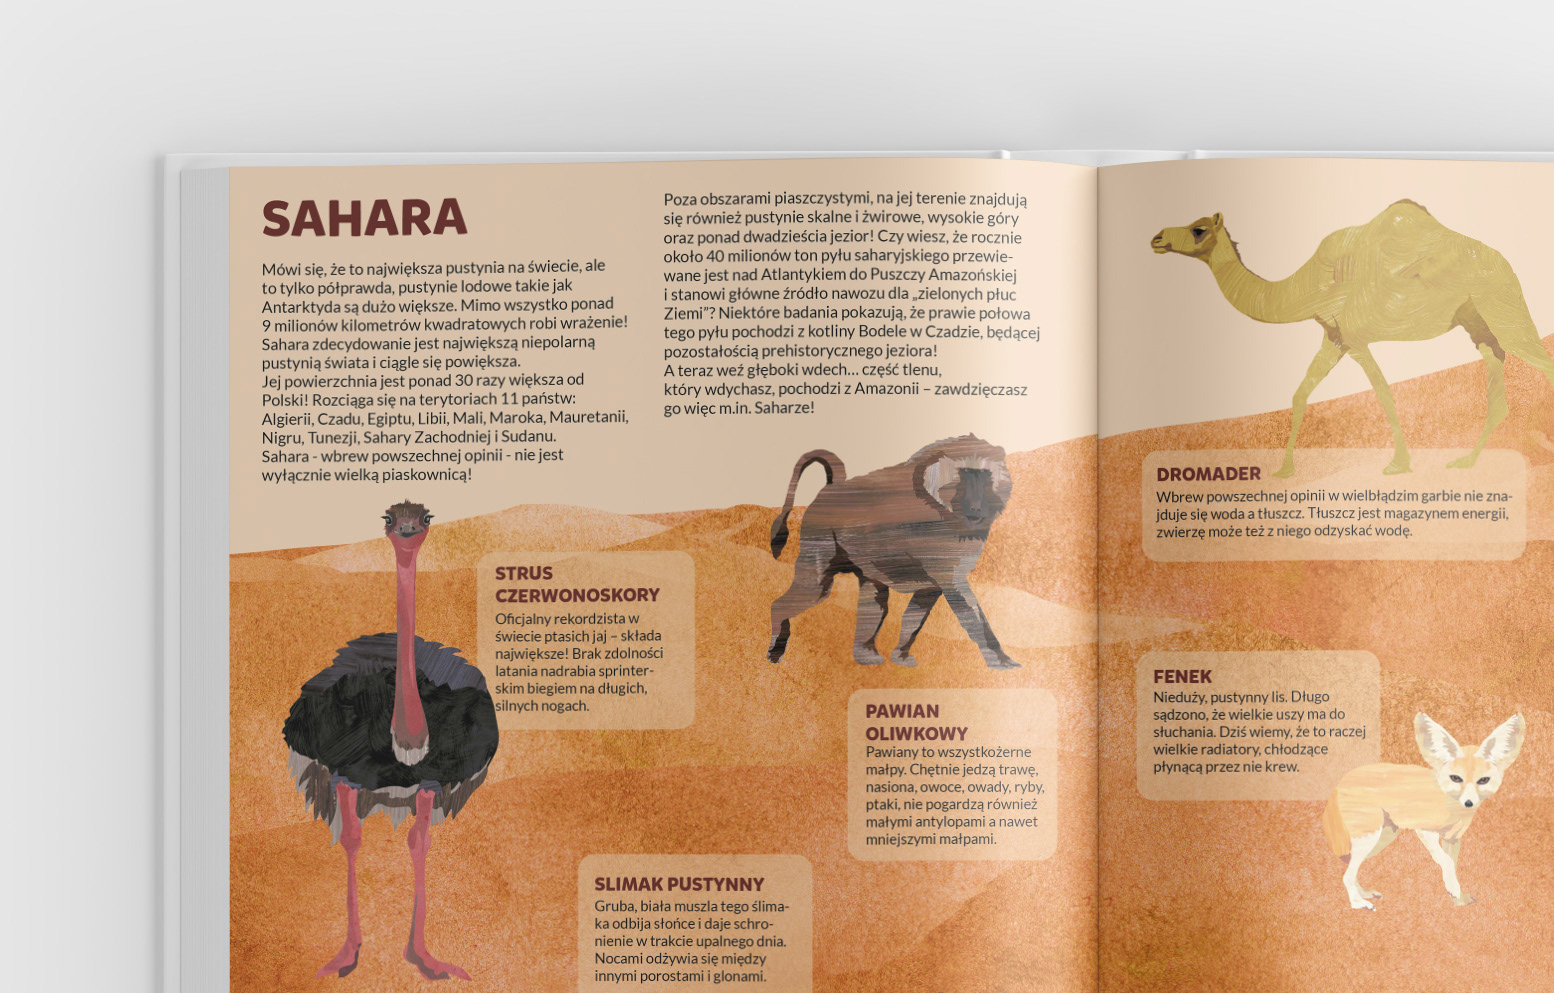 Justyna Styszyńska Illustrations - Sahara desert animals